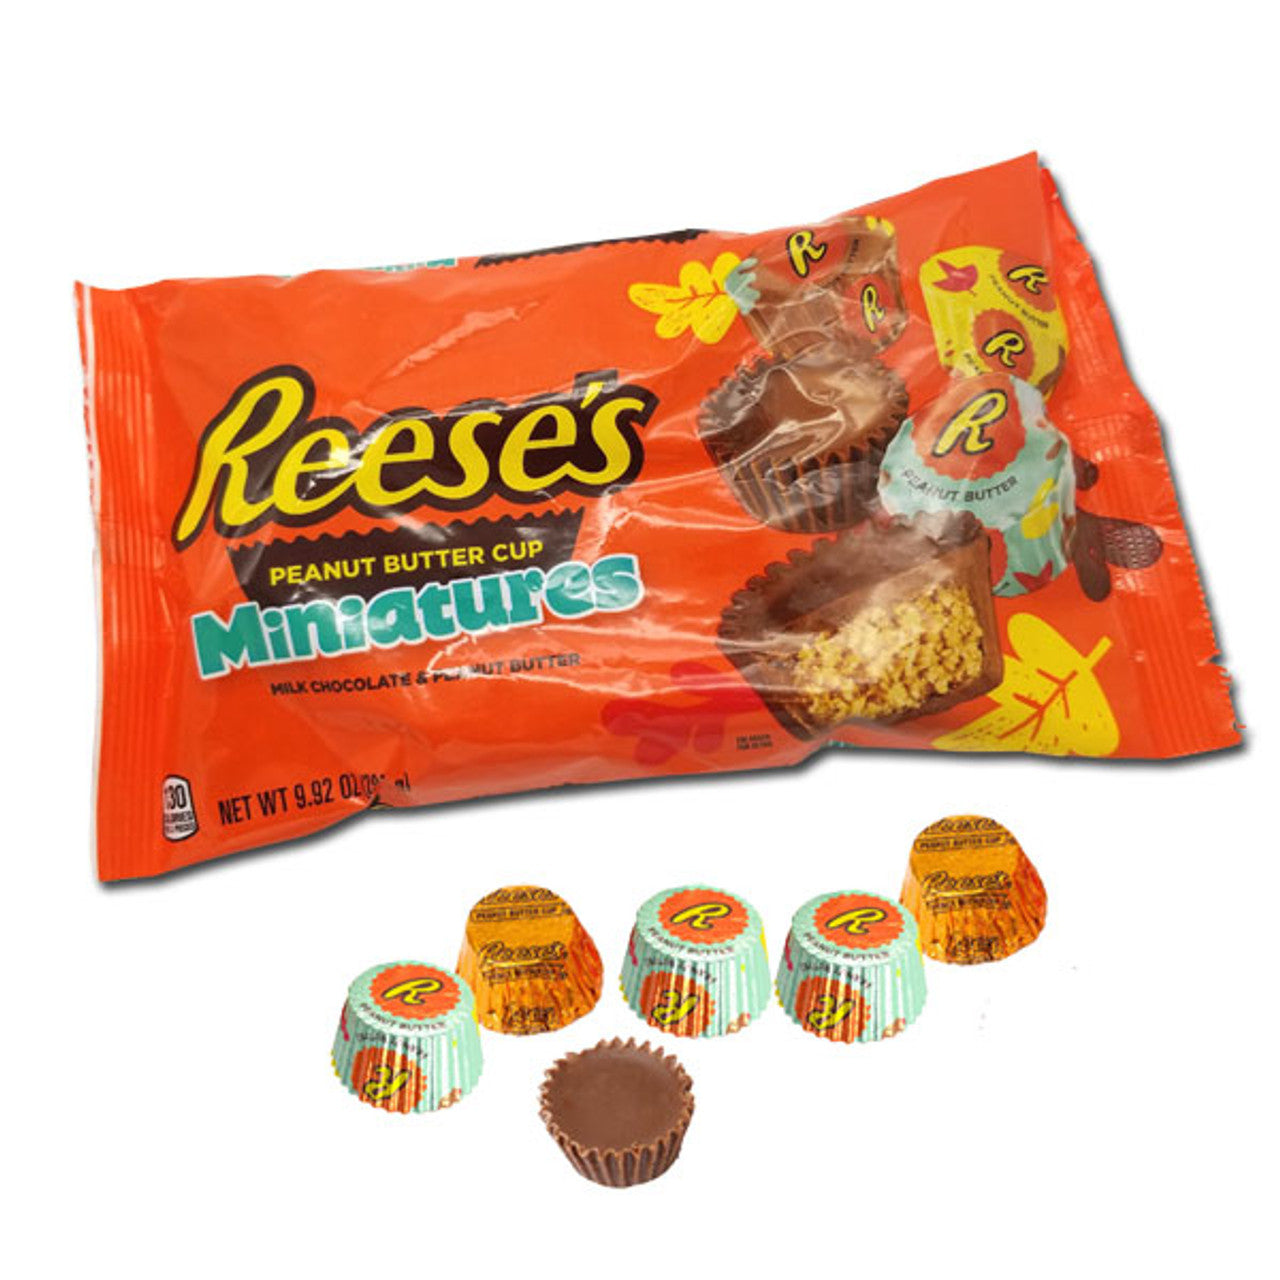 Reese's Miniatures Fall Colors Bag 9.92oz - 6ct